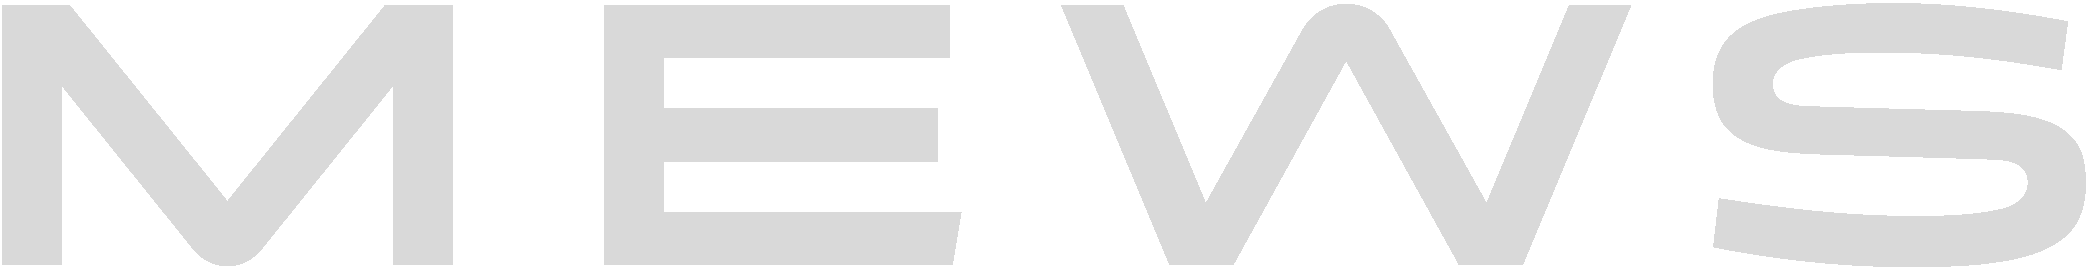 https://virdee.co/wp-content/uploads/2021/06/mews-logo-2020.png